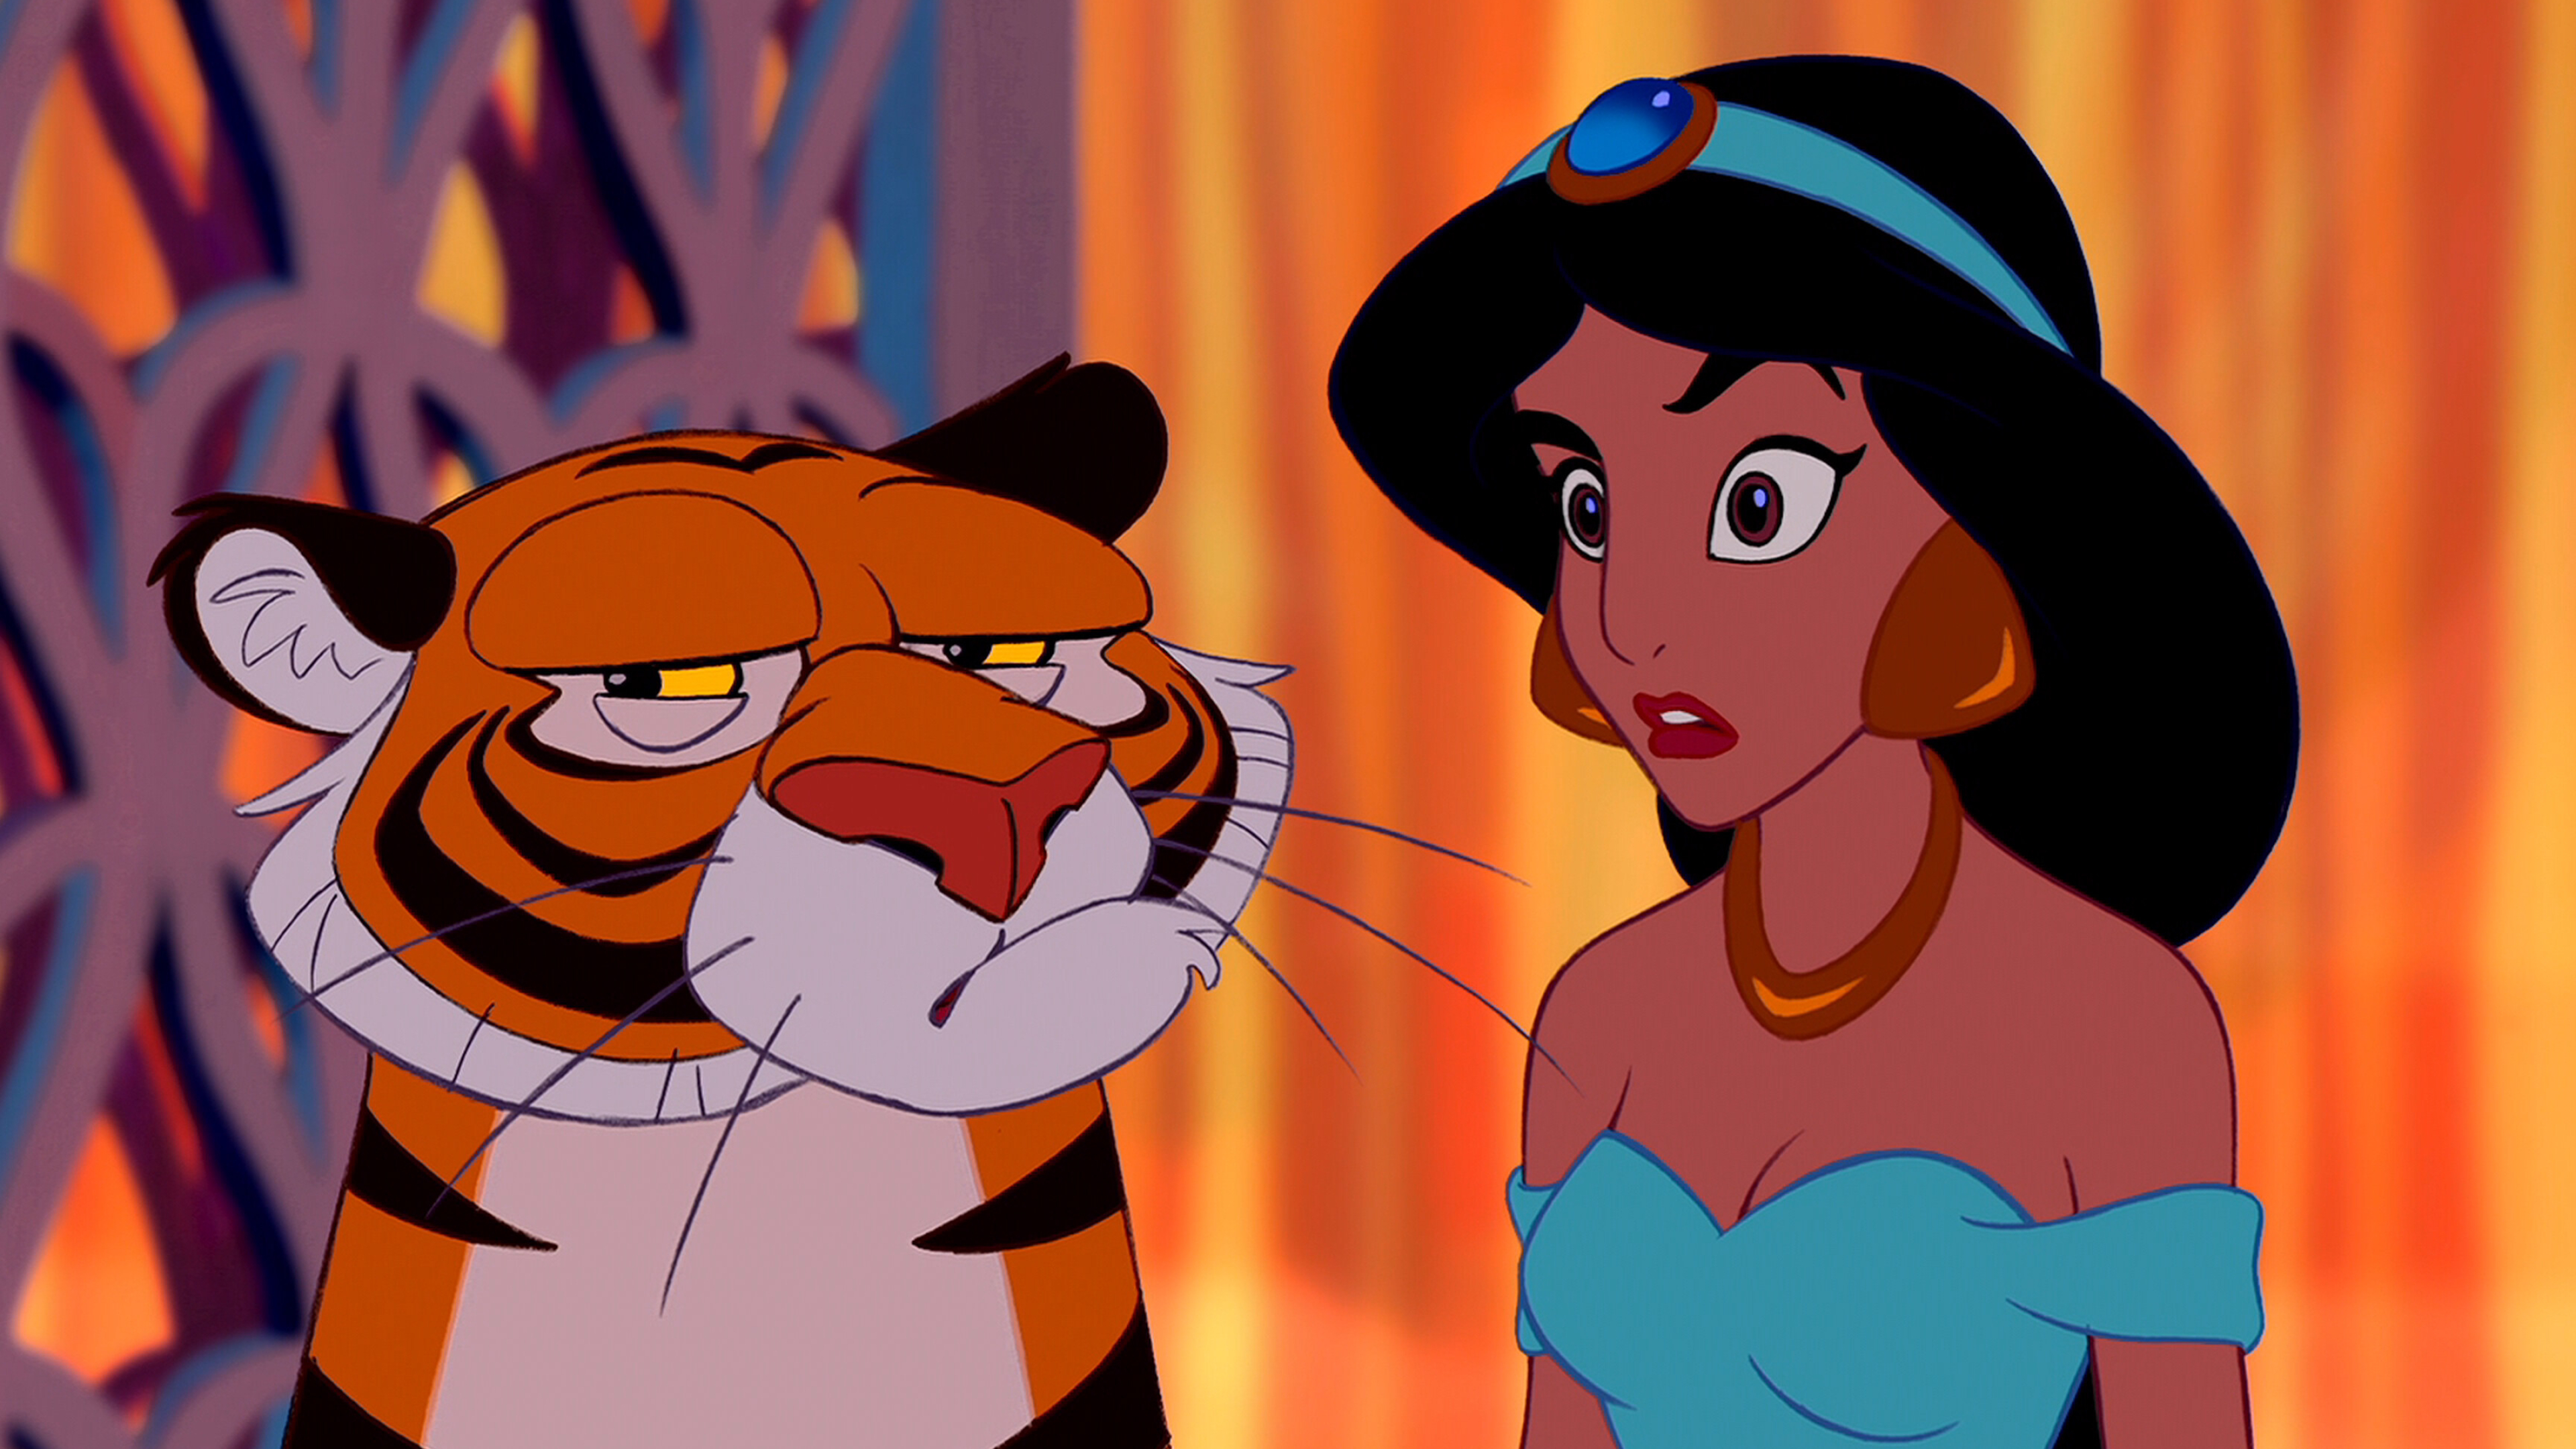 Aladdin (Cartoon): Linda Larkin as Jasmine, the princess of Agrabah and daughter of the Sultan. 3840x2160 4K Wallpaper.